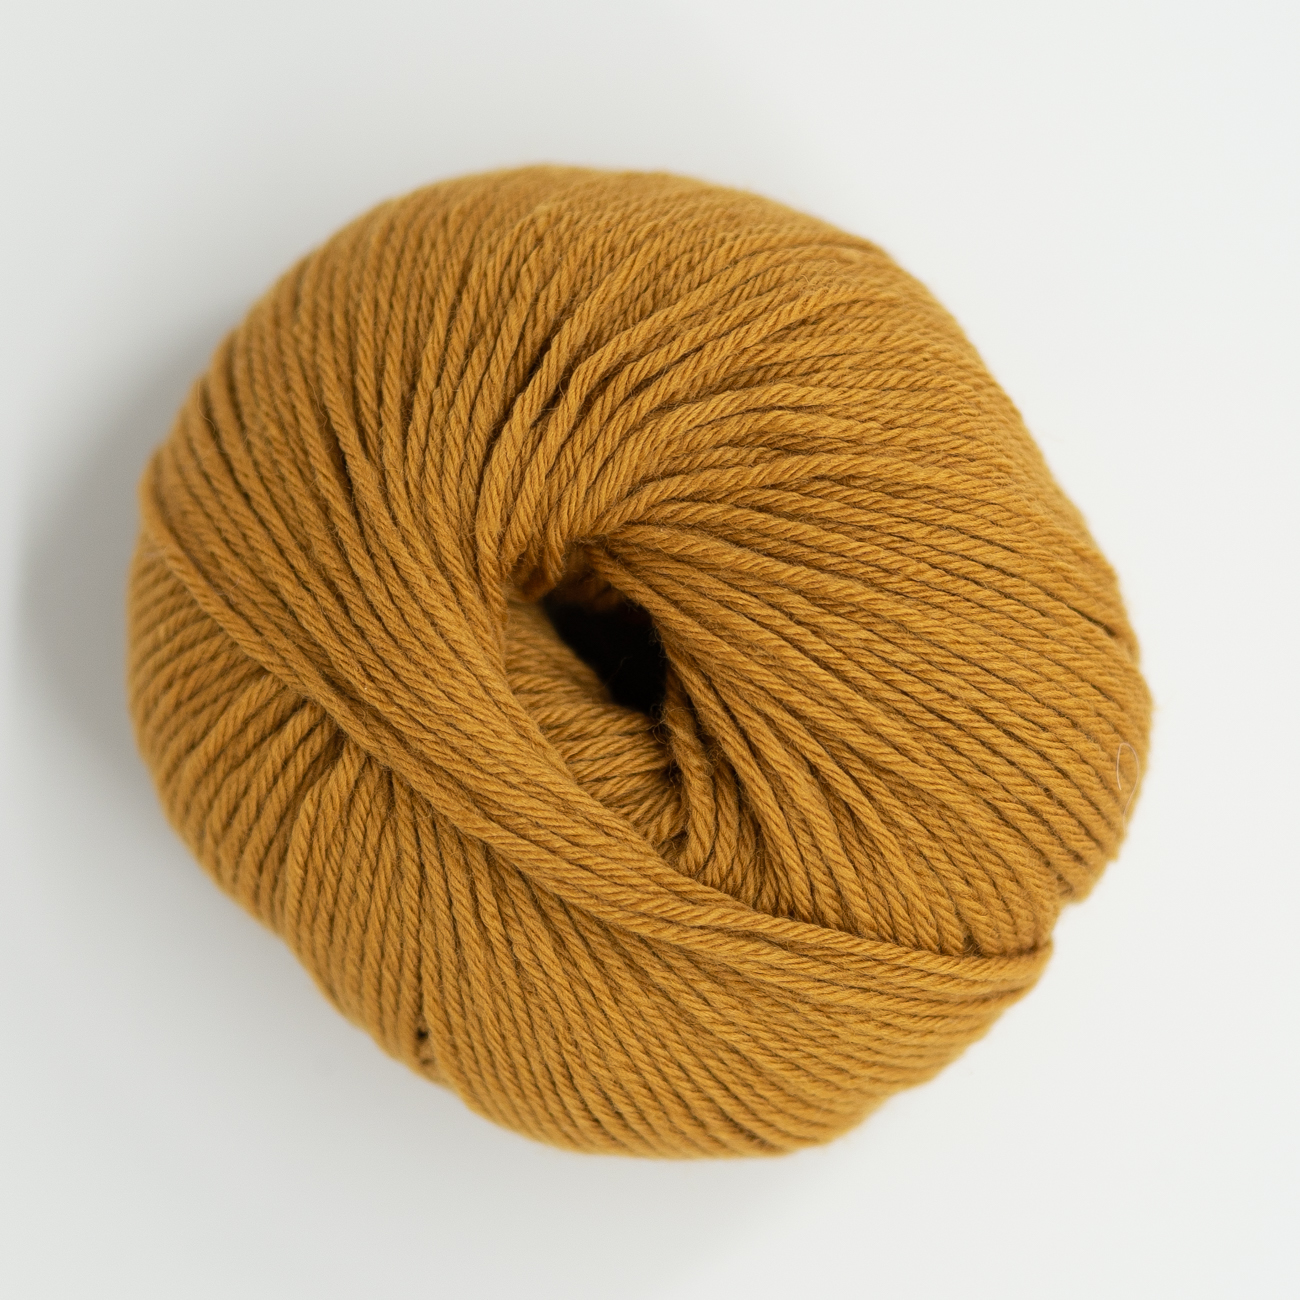  - Salted caramel | Pop merino | Merino wool yarn - by HipKnitShop - 26/09/2020